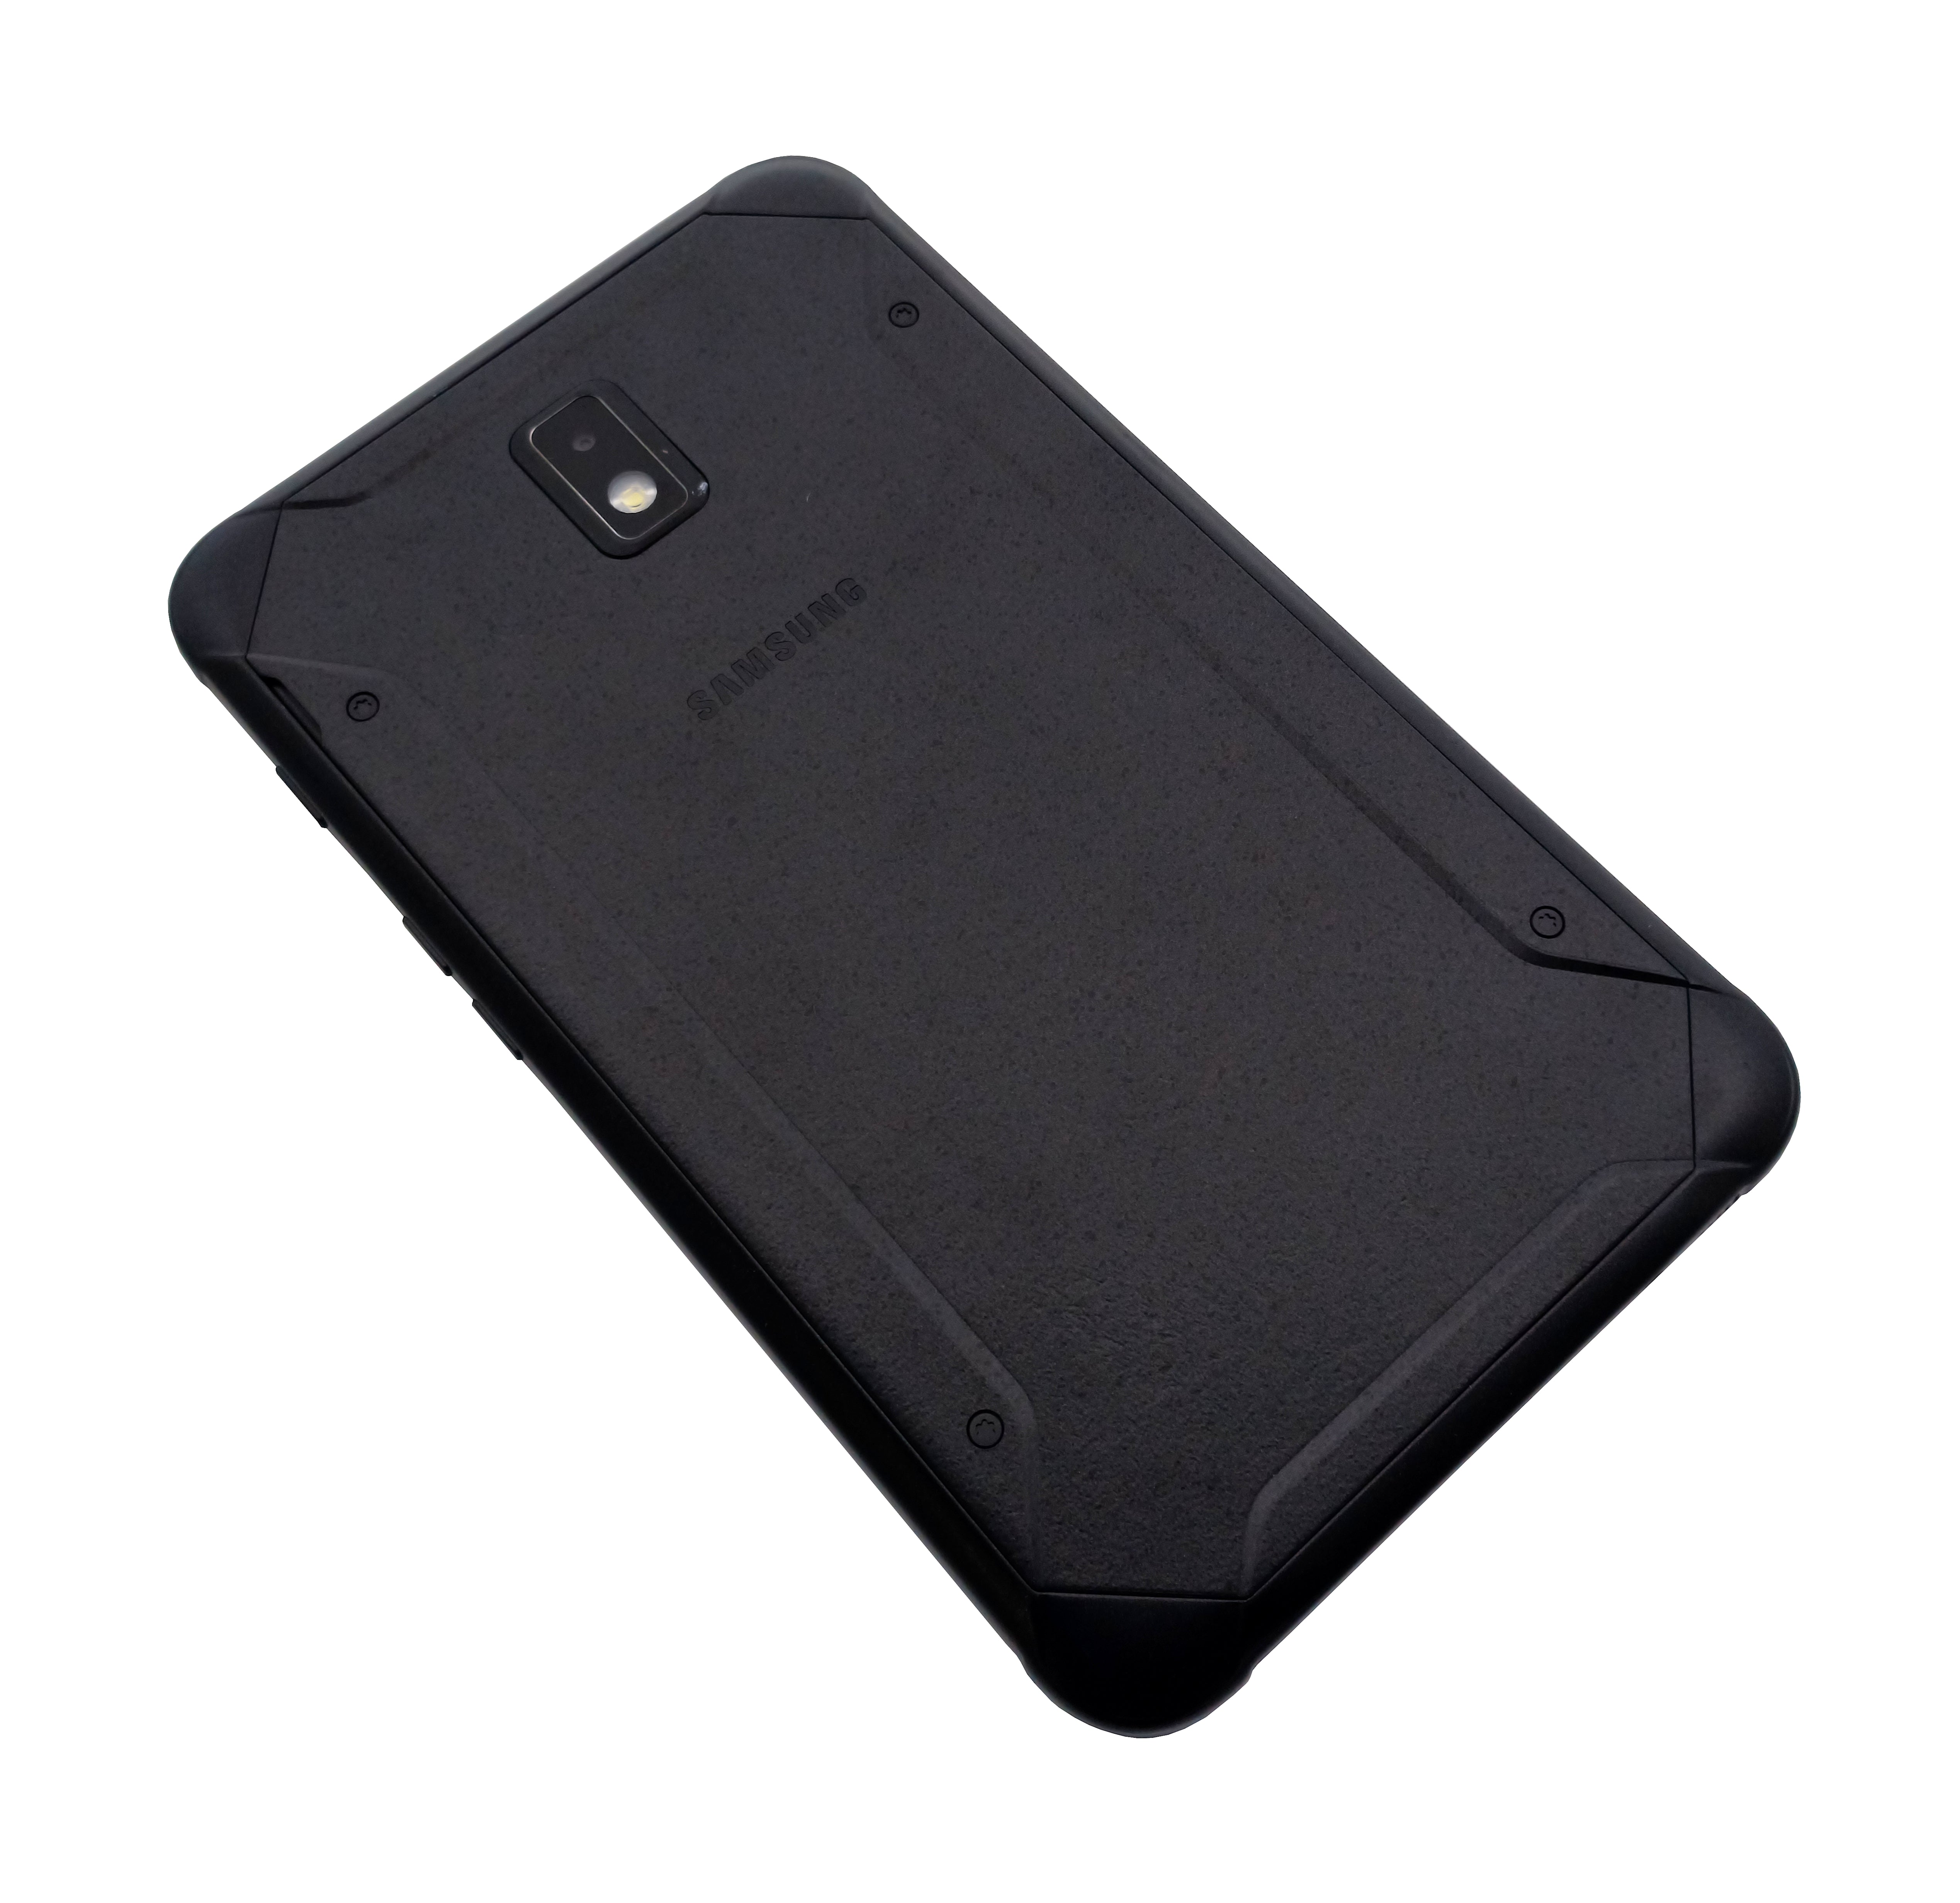 Samsung Galaxy Tab Active 2 Tablet, 16GB, Unlocked, Black, SM-T395